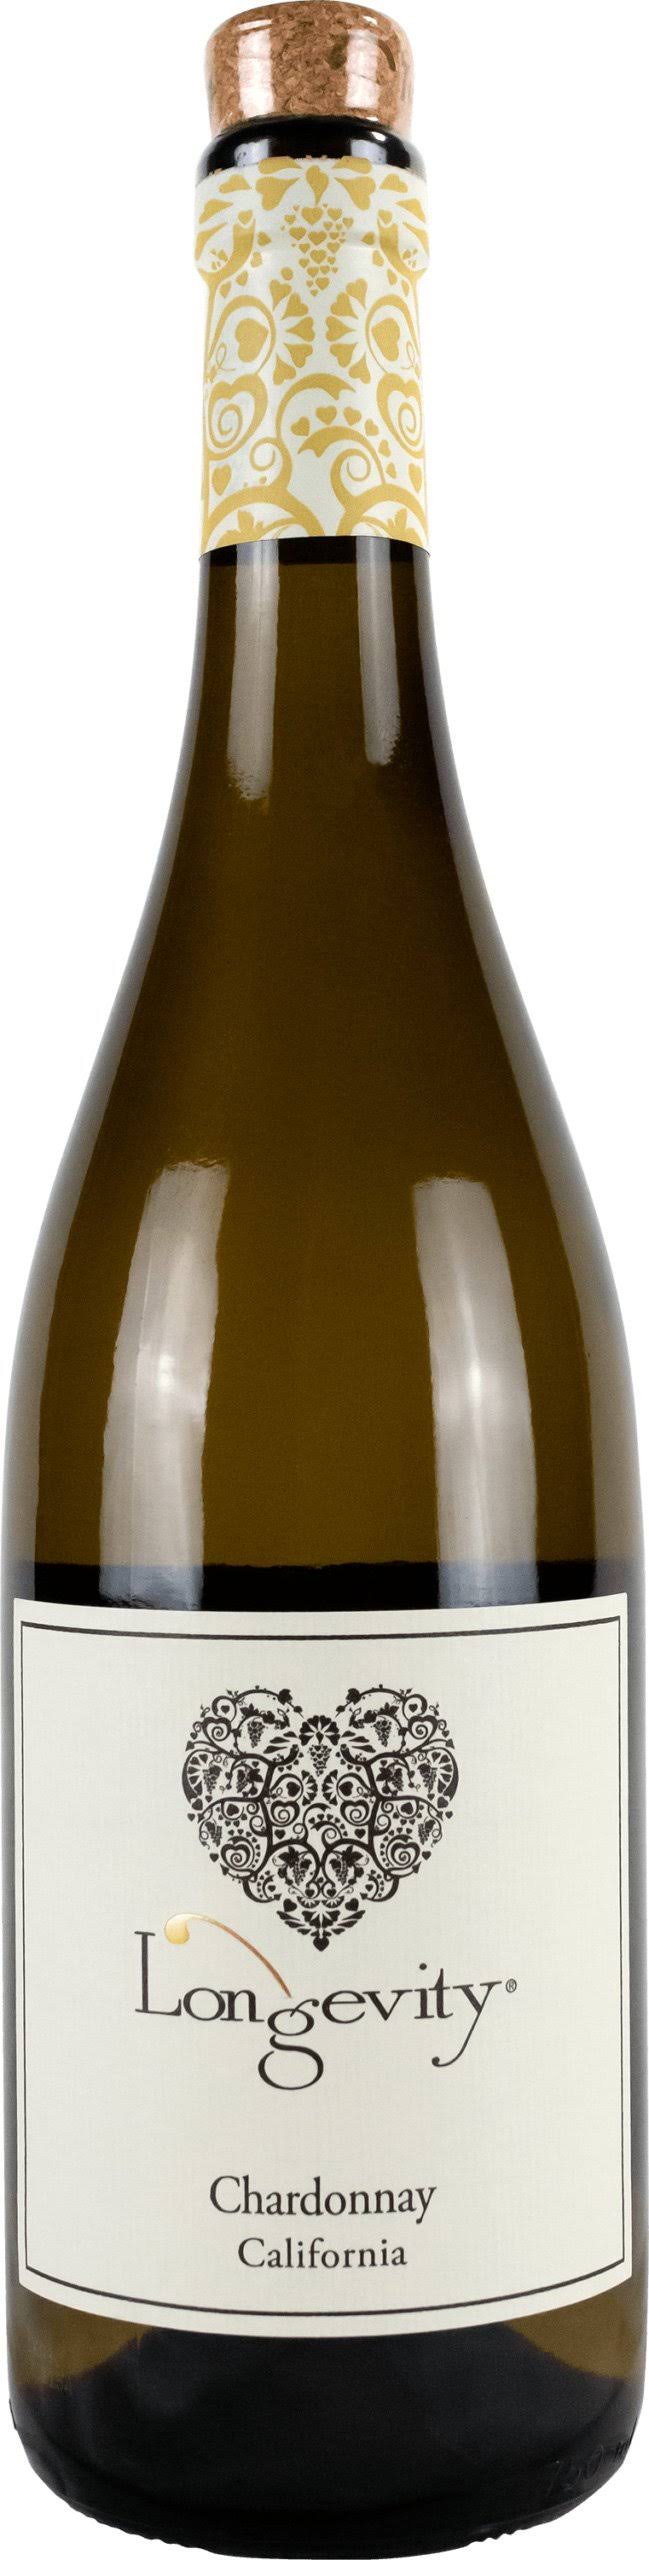 Longevity Chardonnay, California - 750 ml